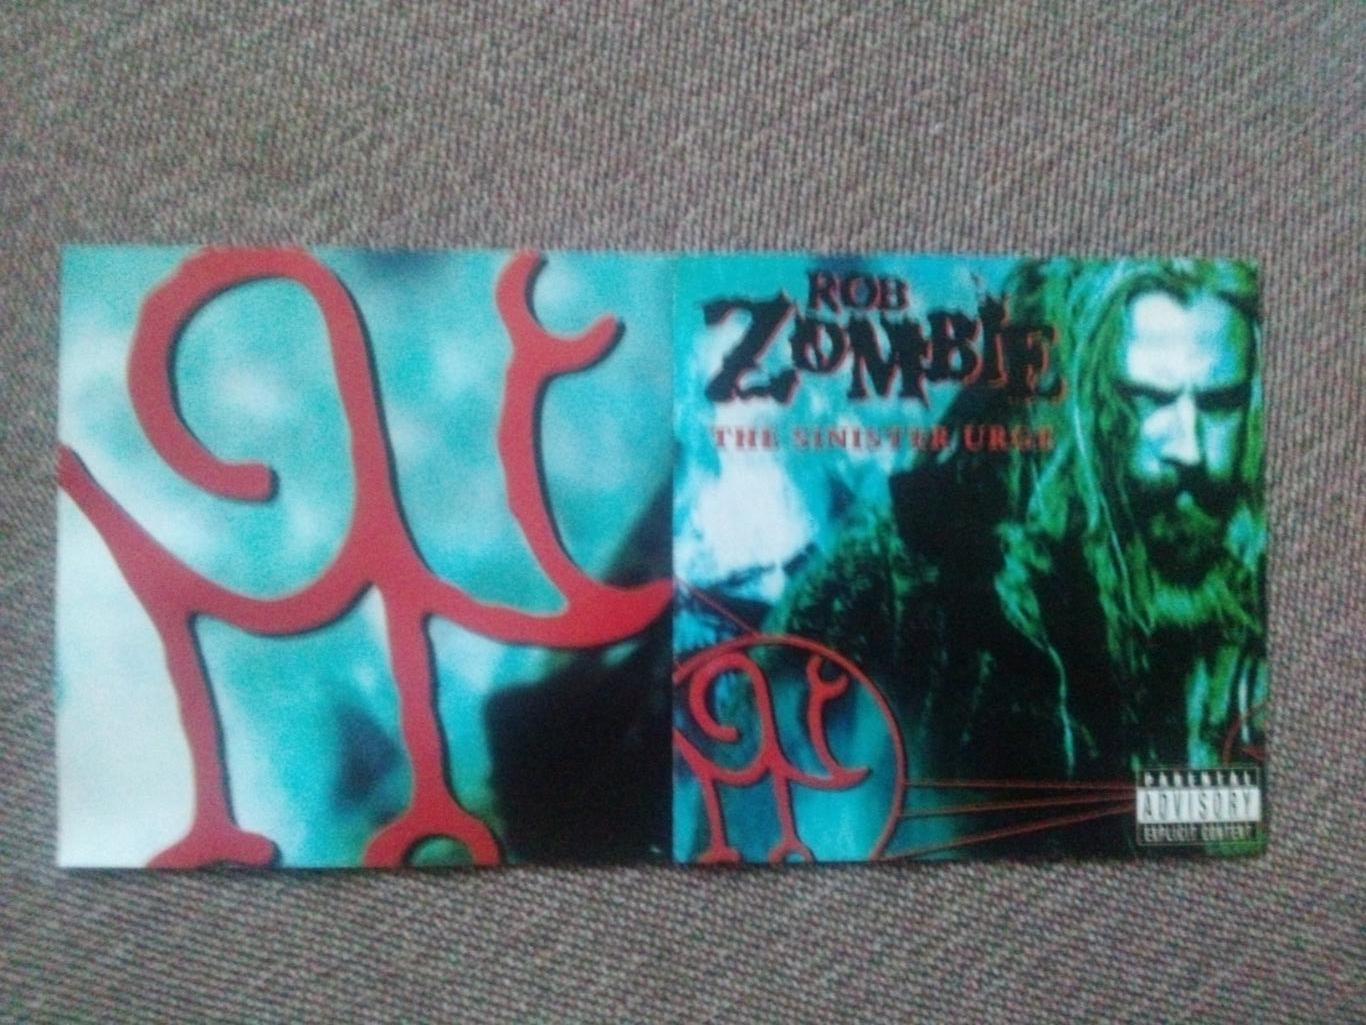 ГруппаRob Zombie-The Sinister Urge(студийный альбом 2001 г.) Рок 2